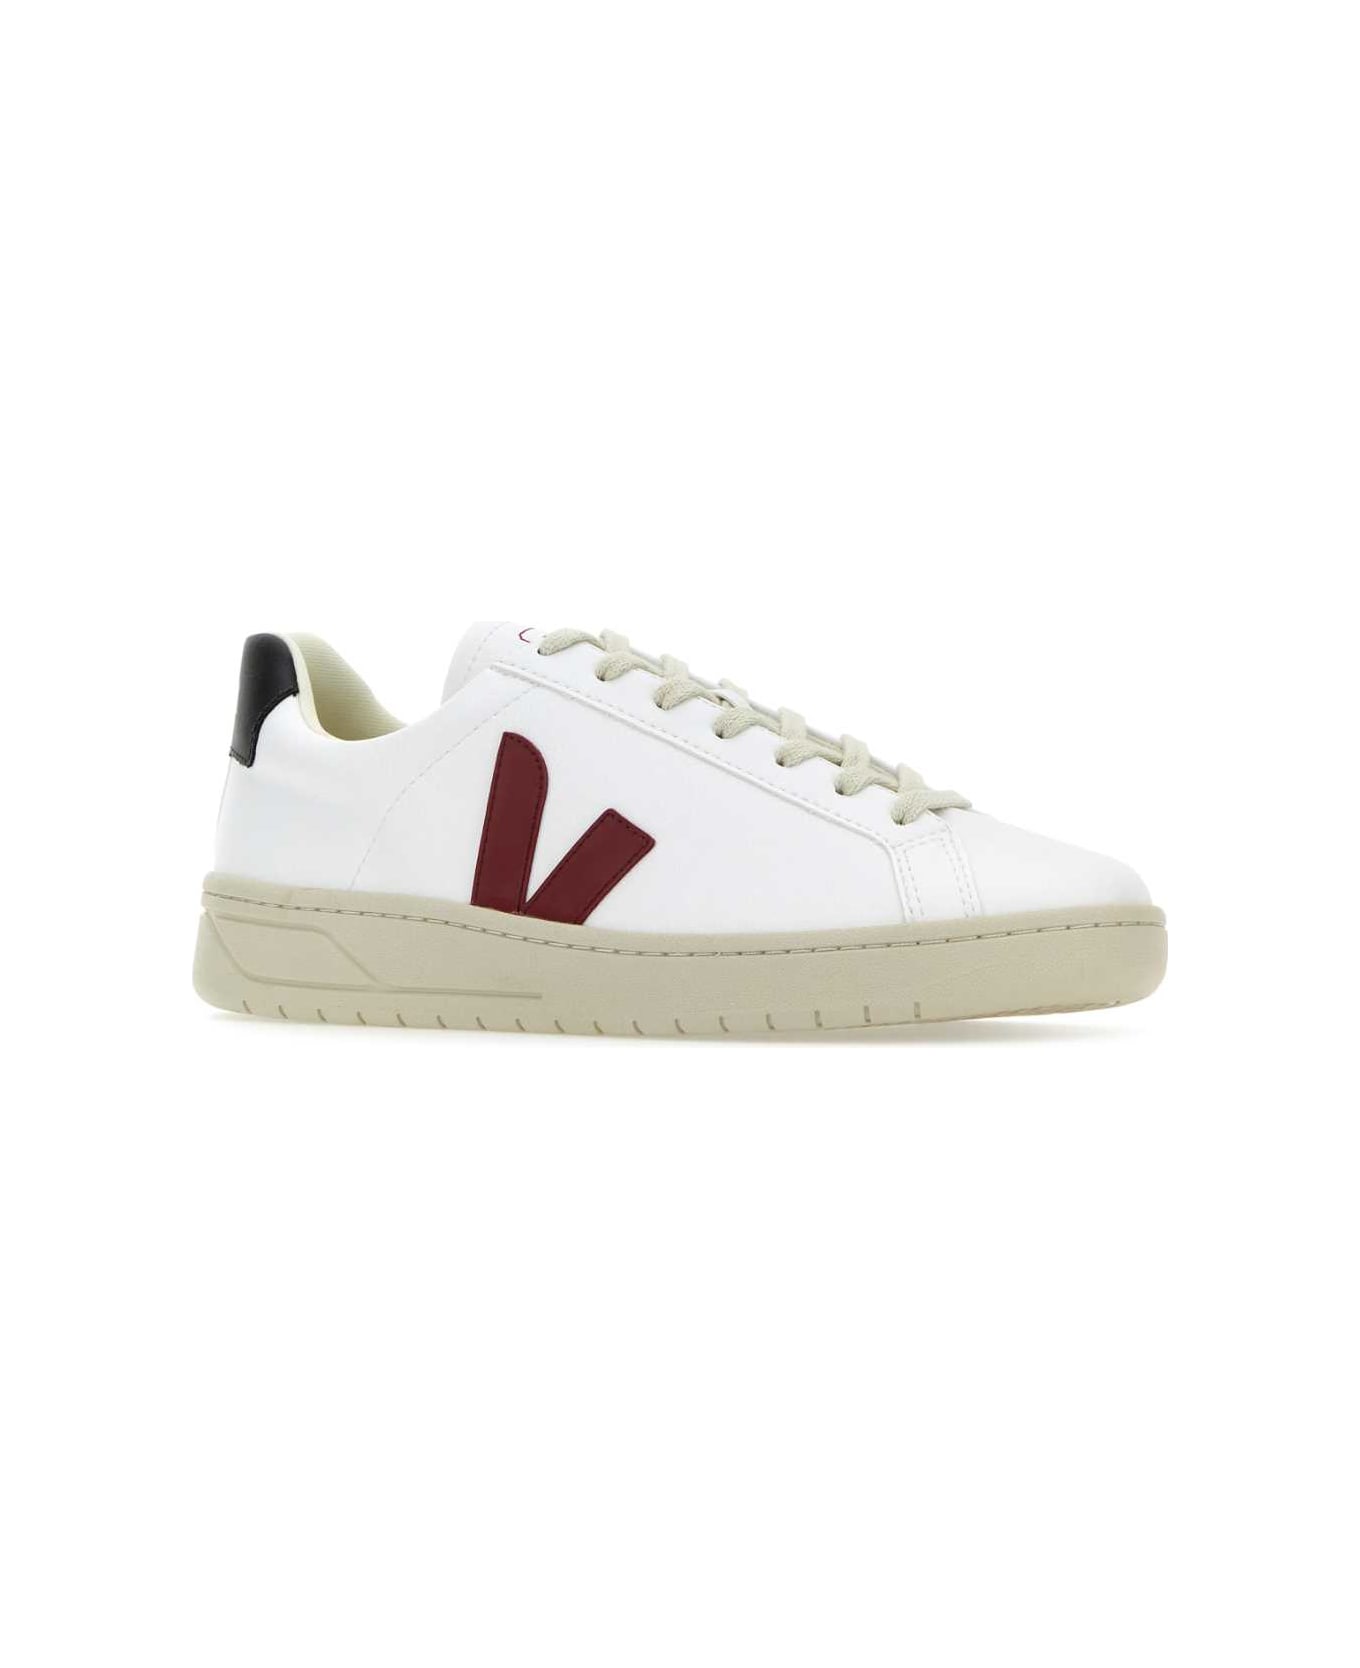 Veja White Synthetic Leather Urca Sneakers - WHITEMARSALABLACK スニーカー